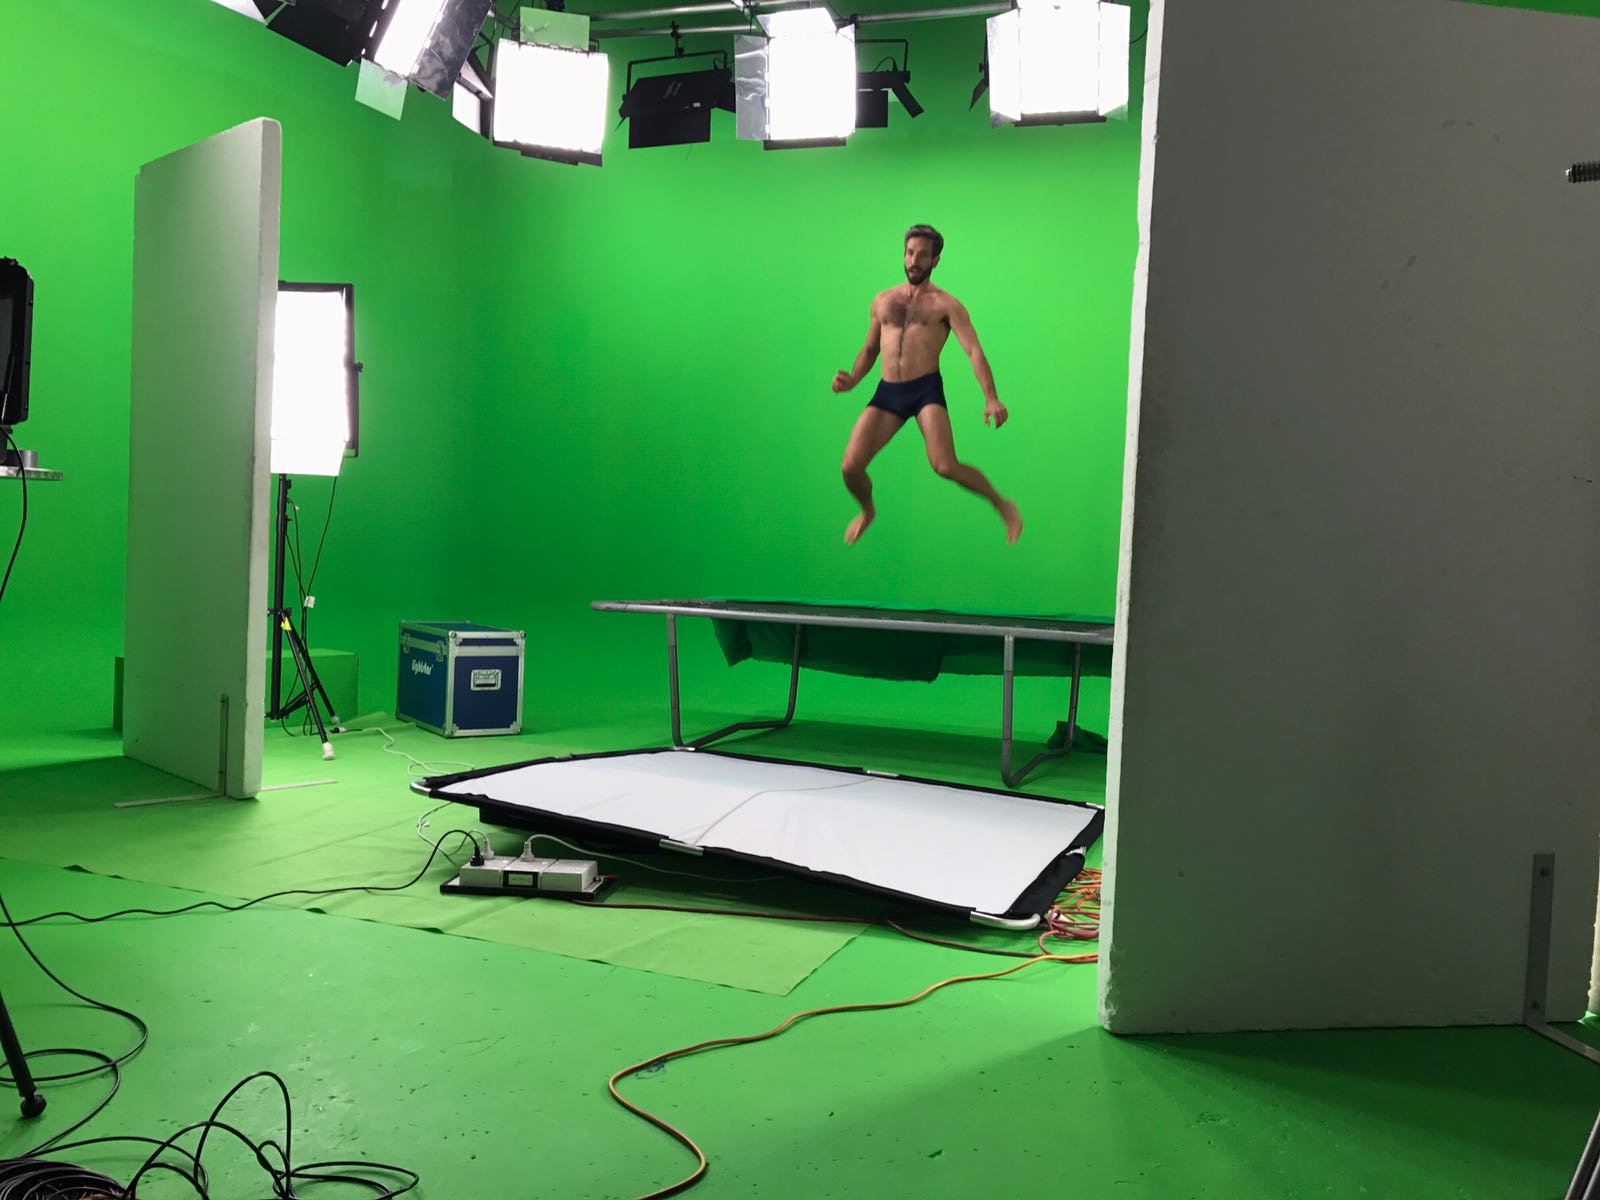 A male model jumping on a trampoline in a green screen studio.